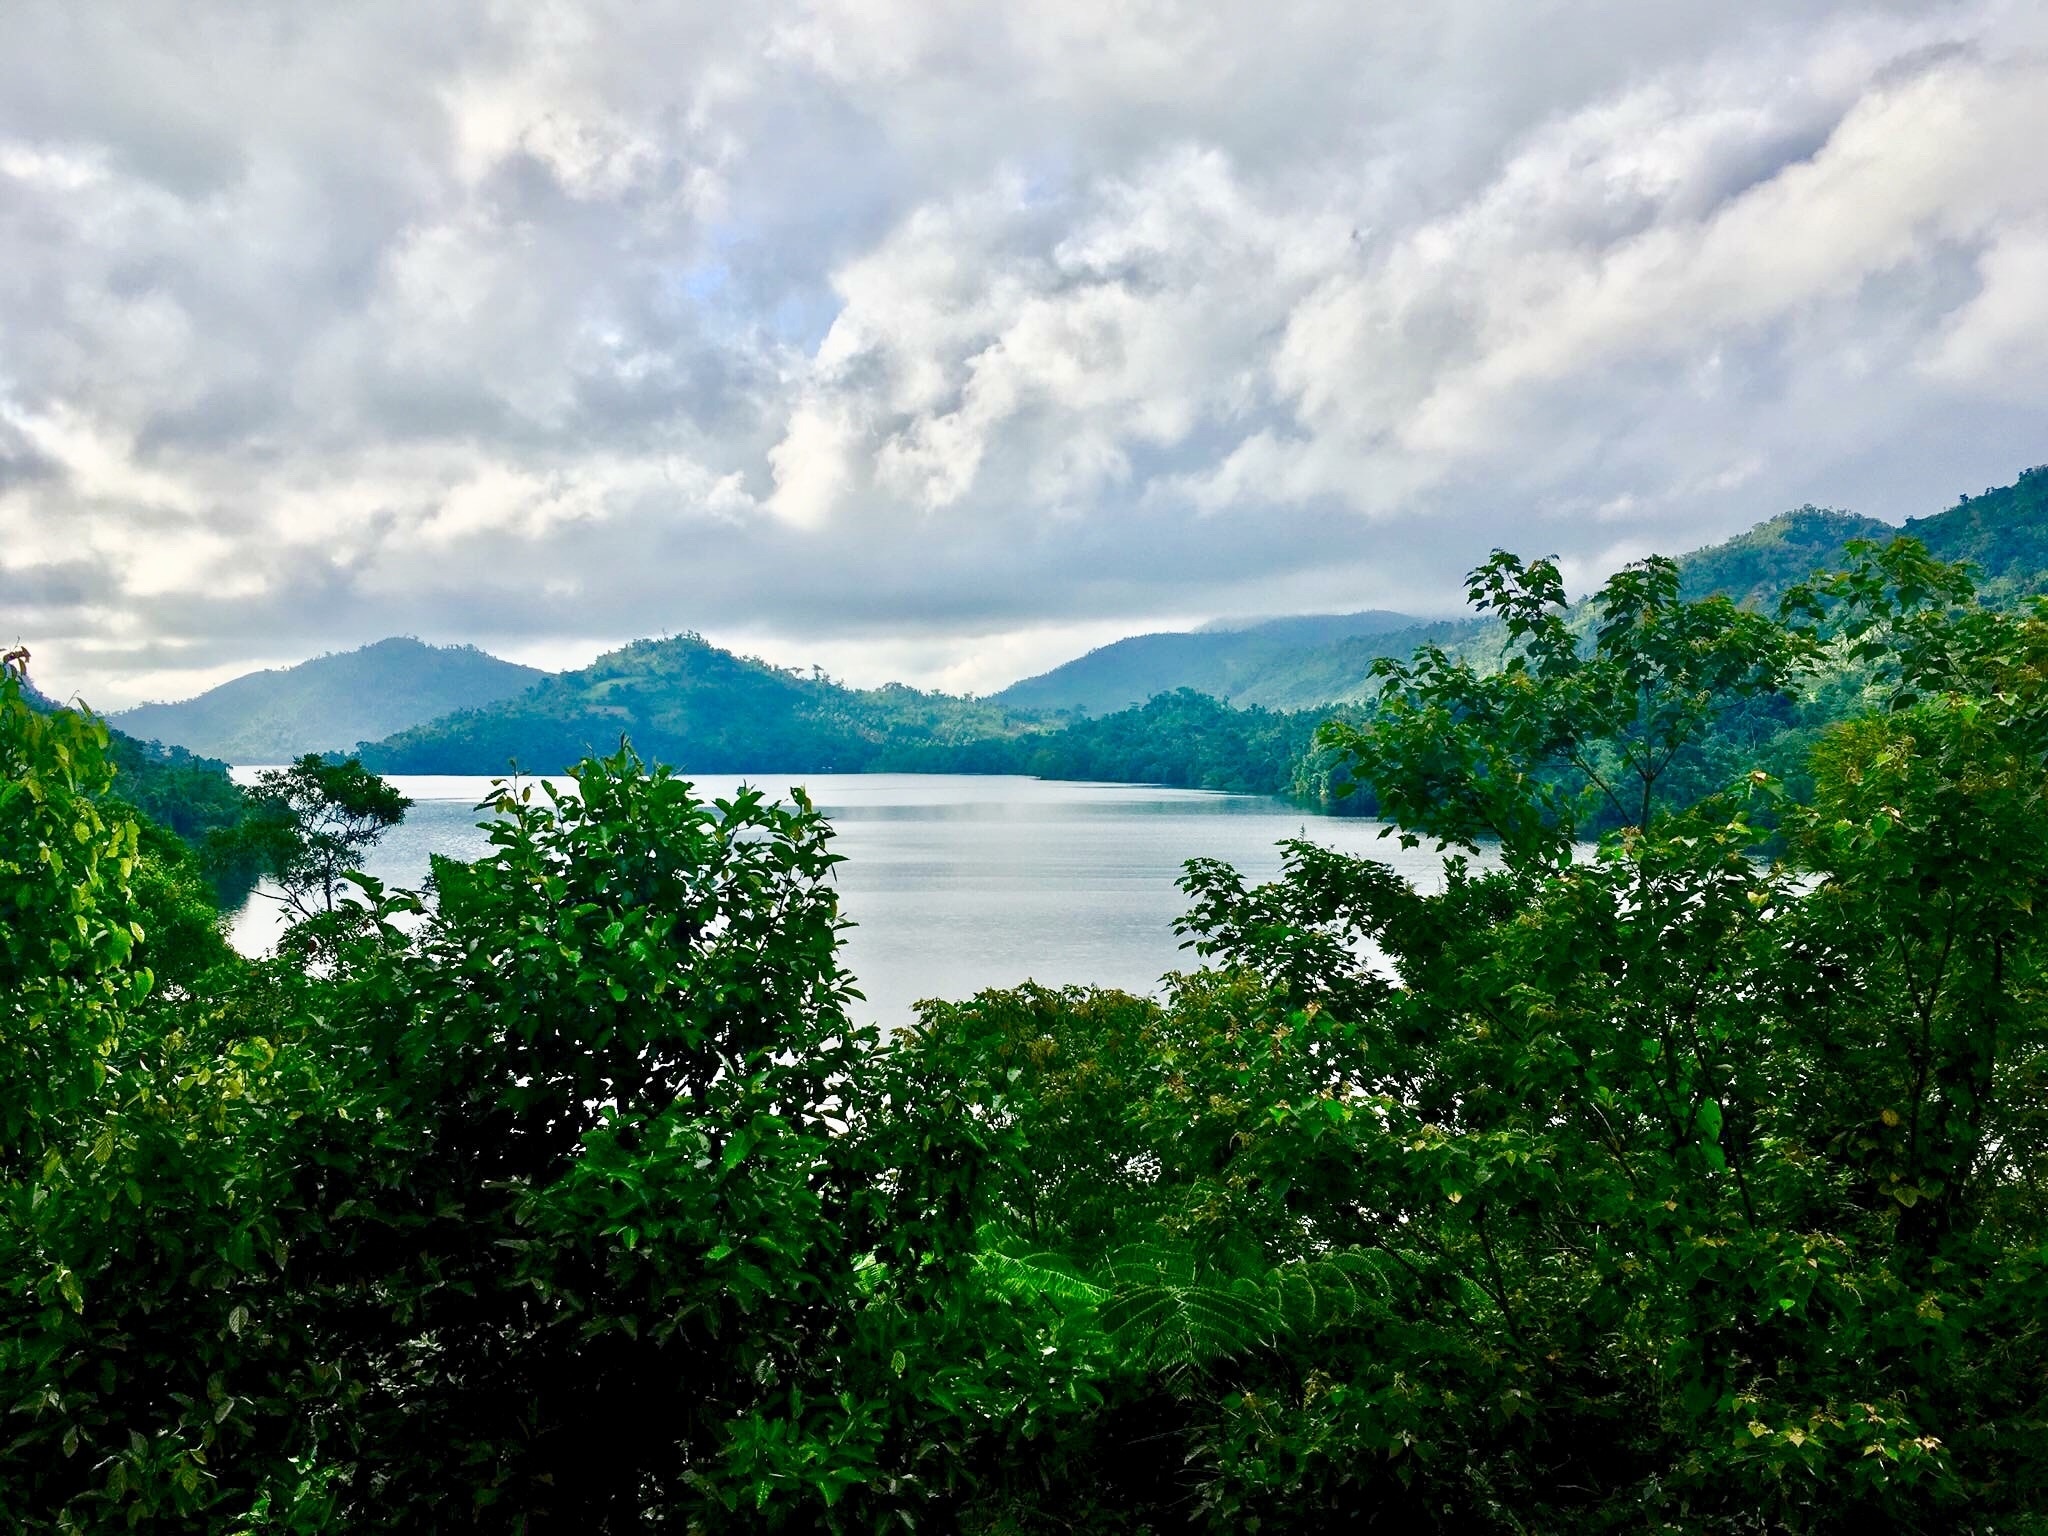 Lake Danao, Ormoc City Philippines, 2130 ft above sea level #Aboveitall #lake #green #mountain #nature #calm